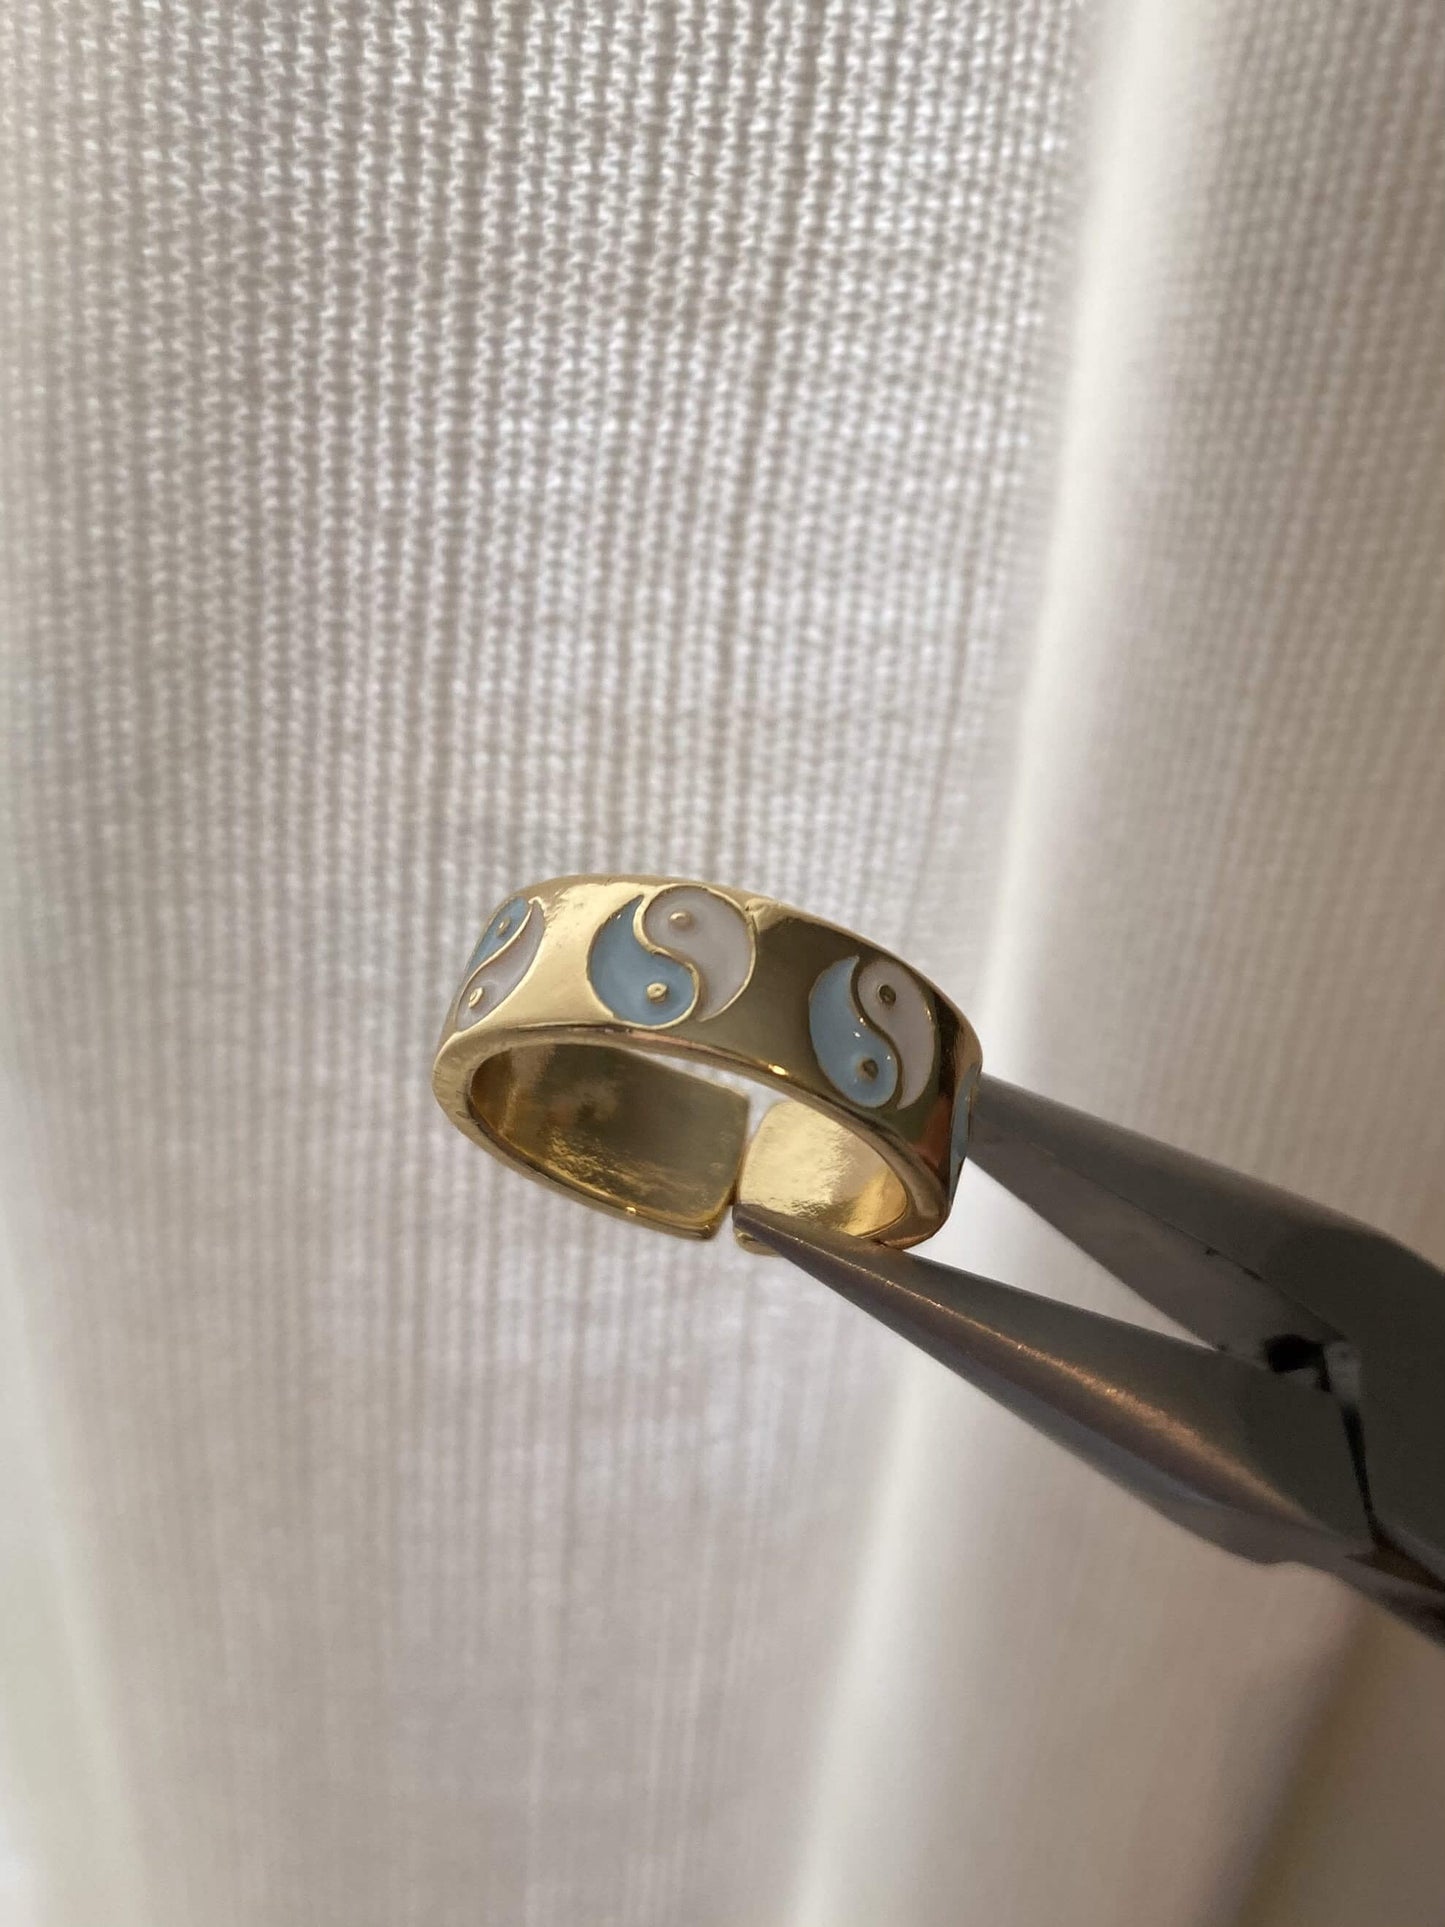 Balanced Babe Ring - Luna Alaska Jewelry yin yang band ring adjustable colorful gold girly jewelry